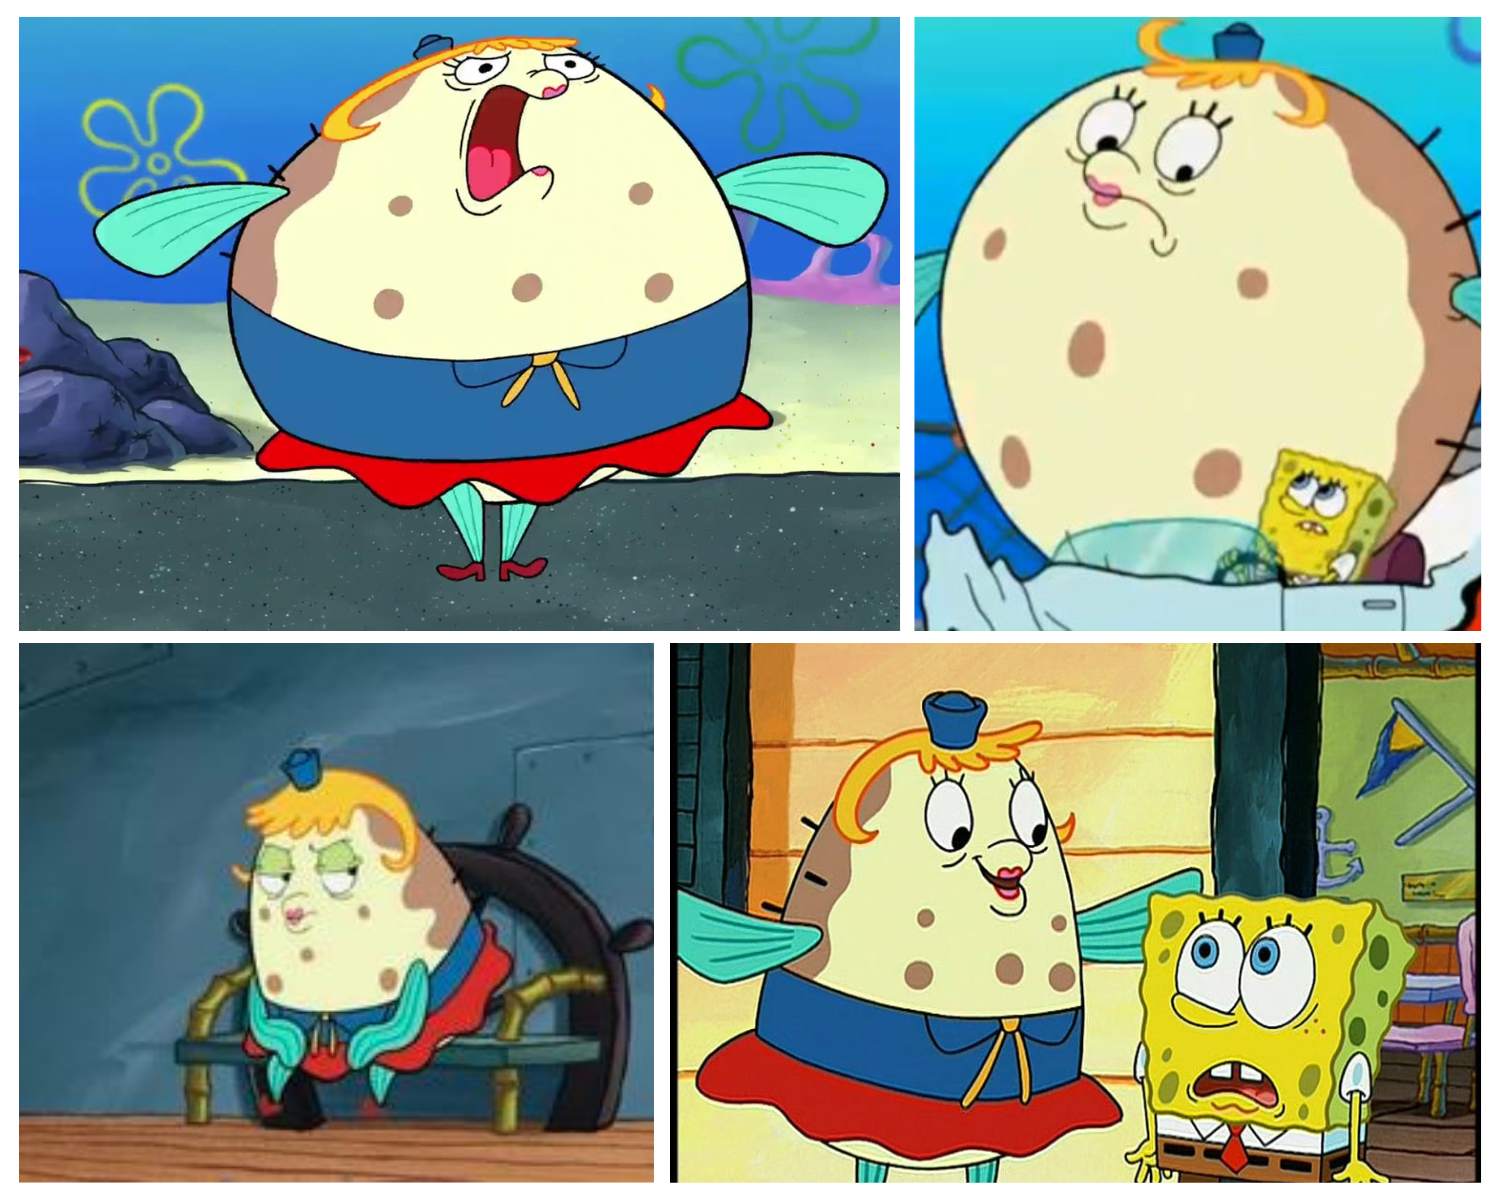 mrs. puff from spongebob